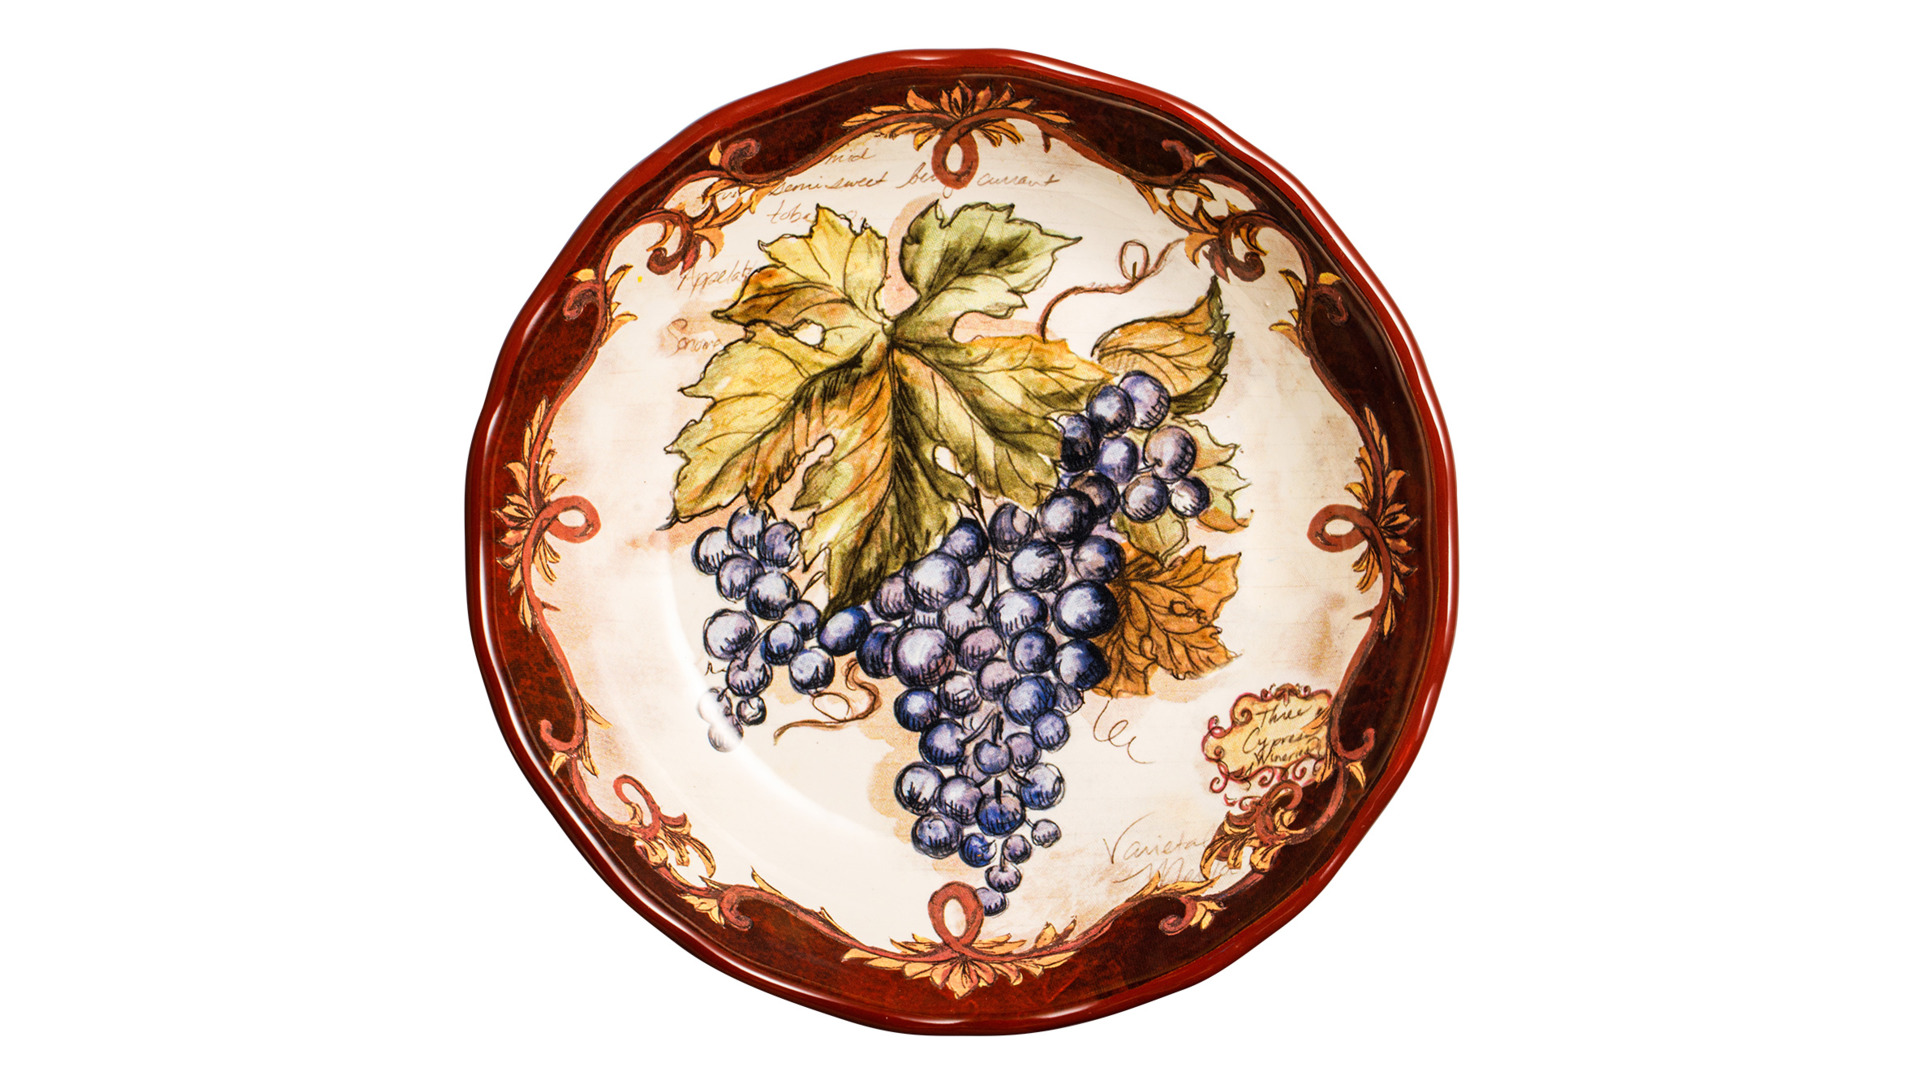 Салатник Certified Int Виноделие Синий виноград 21 см, керамика